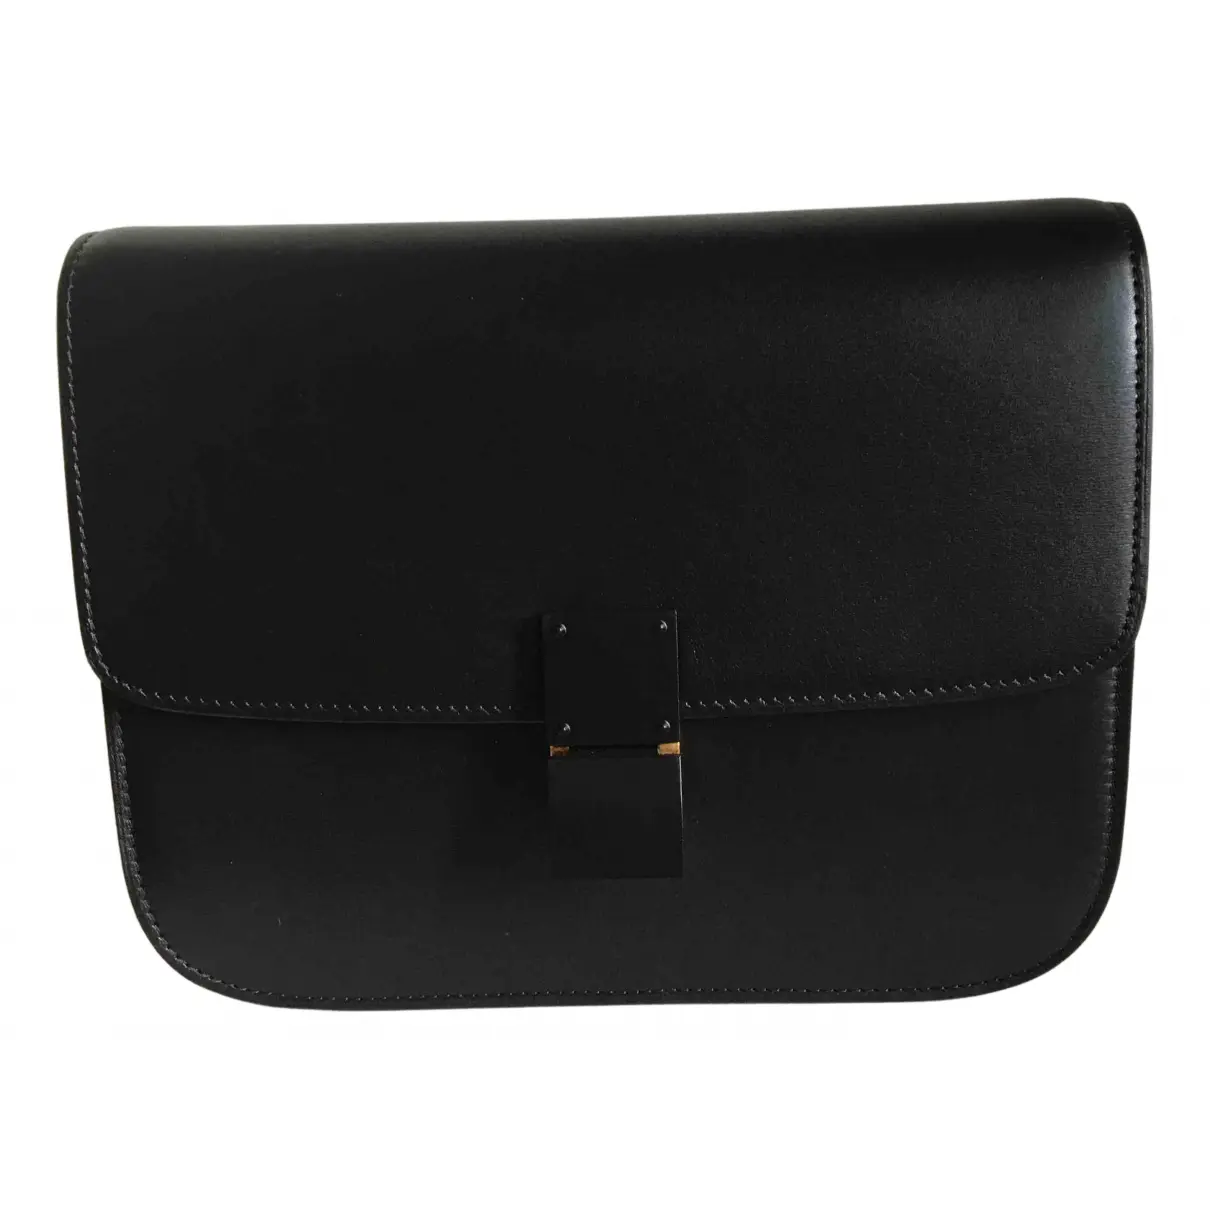 Classic leather handbag Celine